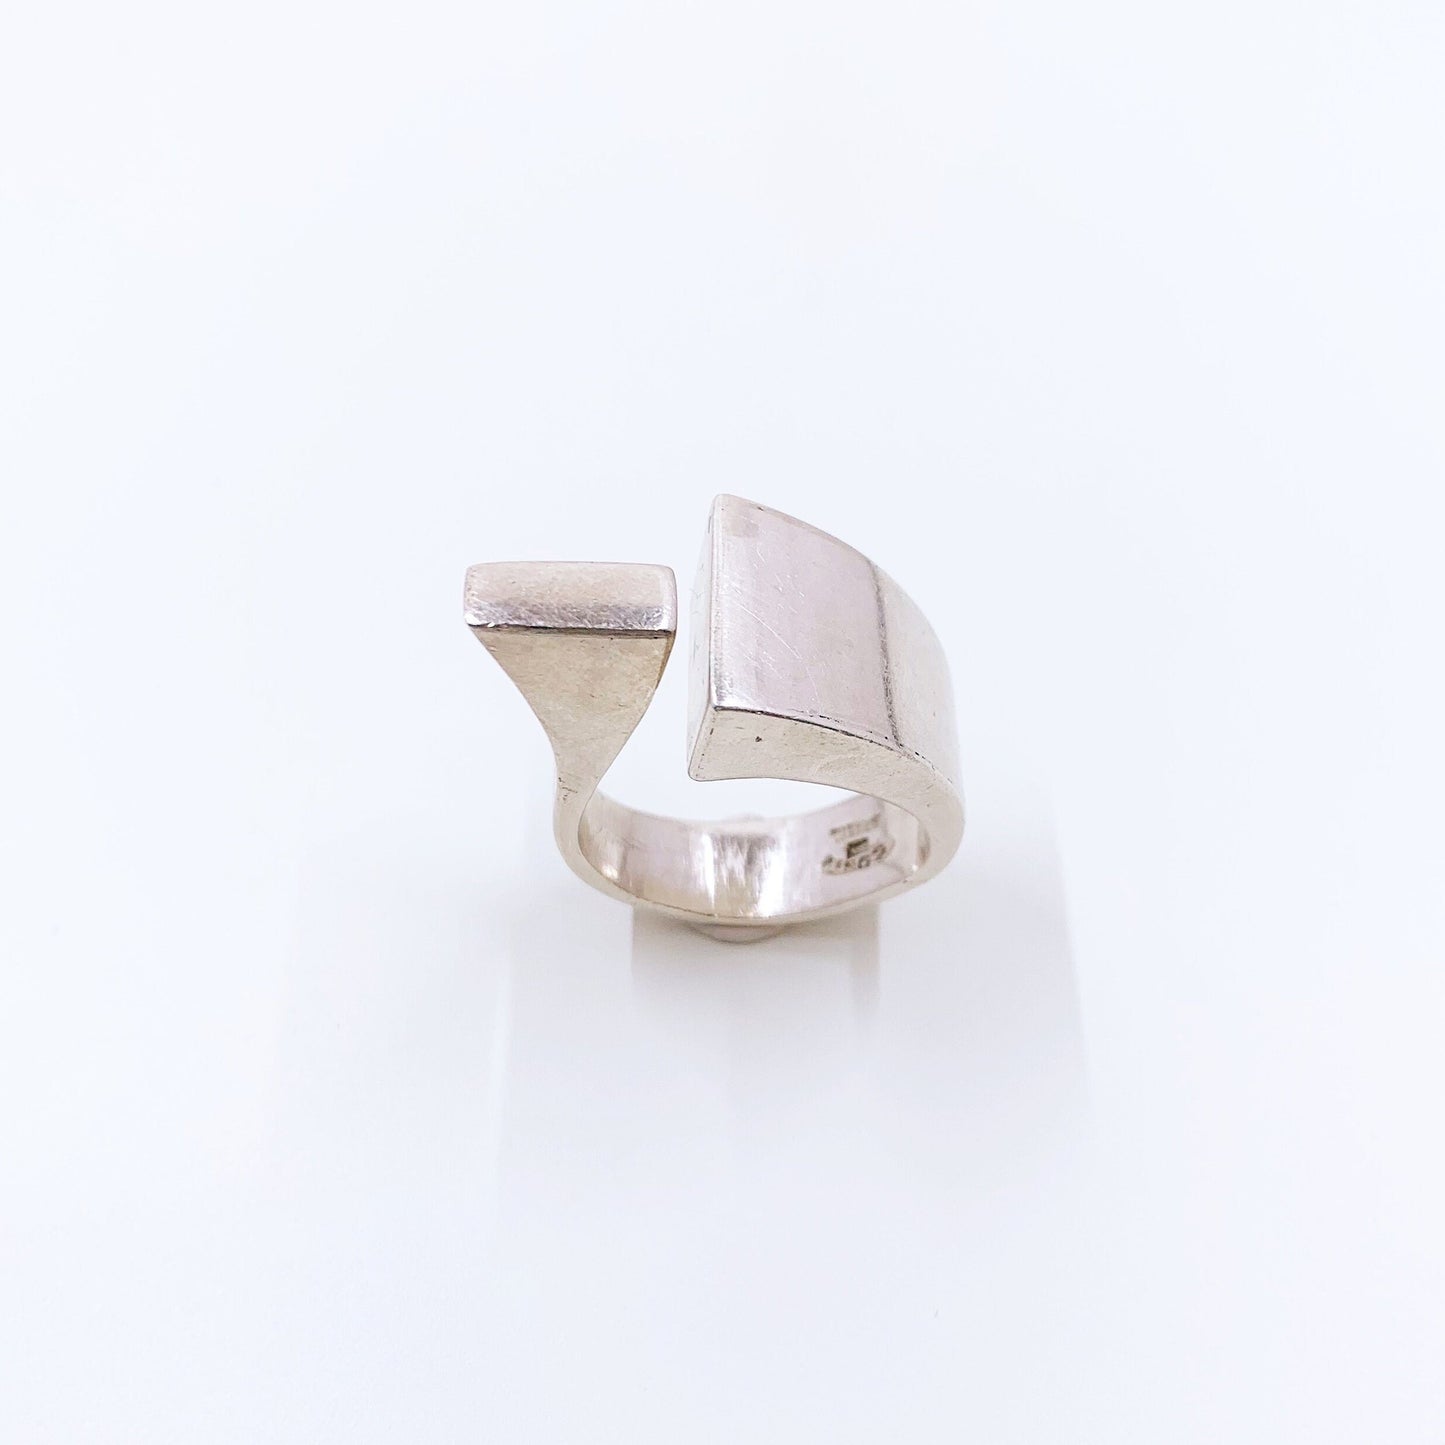 Vintage Silver Brazilian Modernist Ring | Large Sculptural Silver Ring | Size 9 1/4 Ring